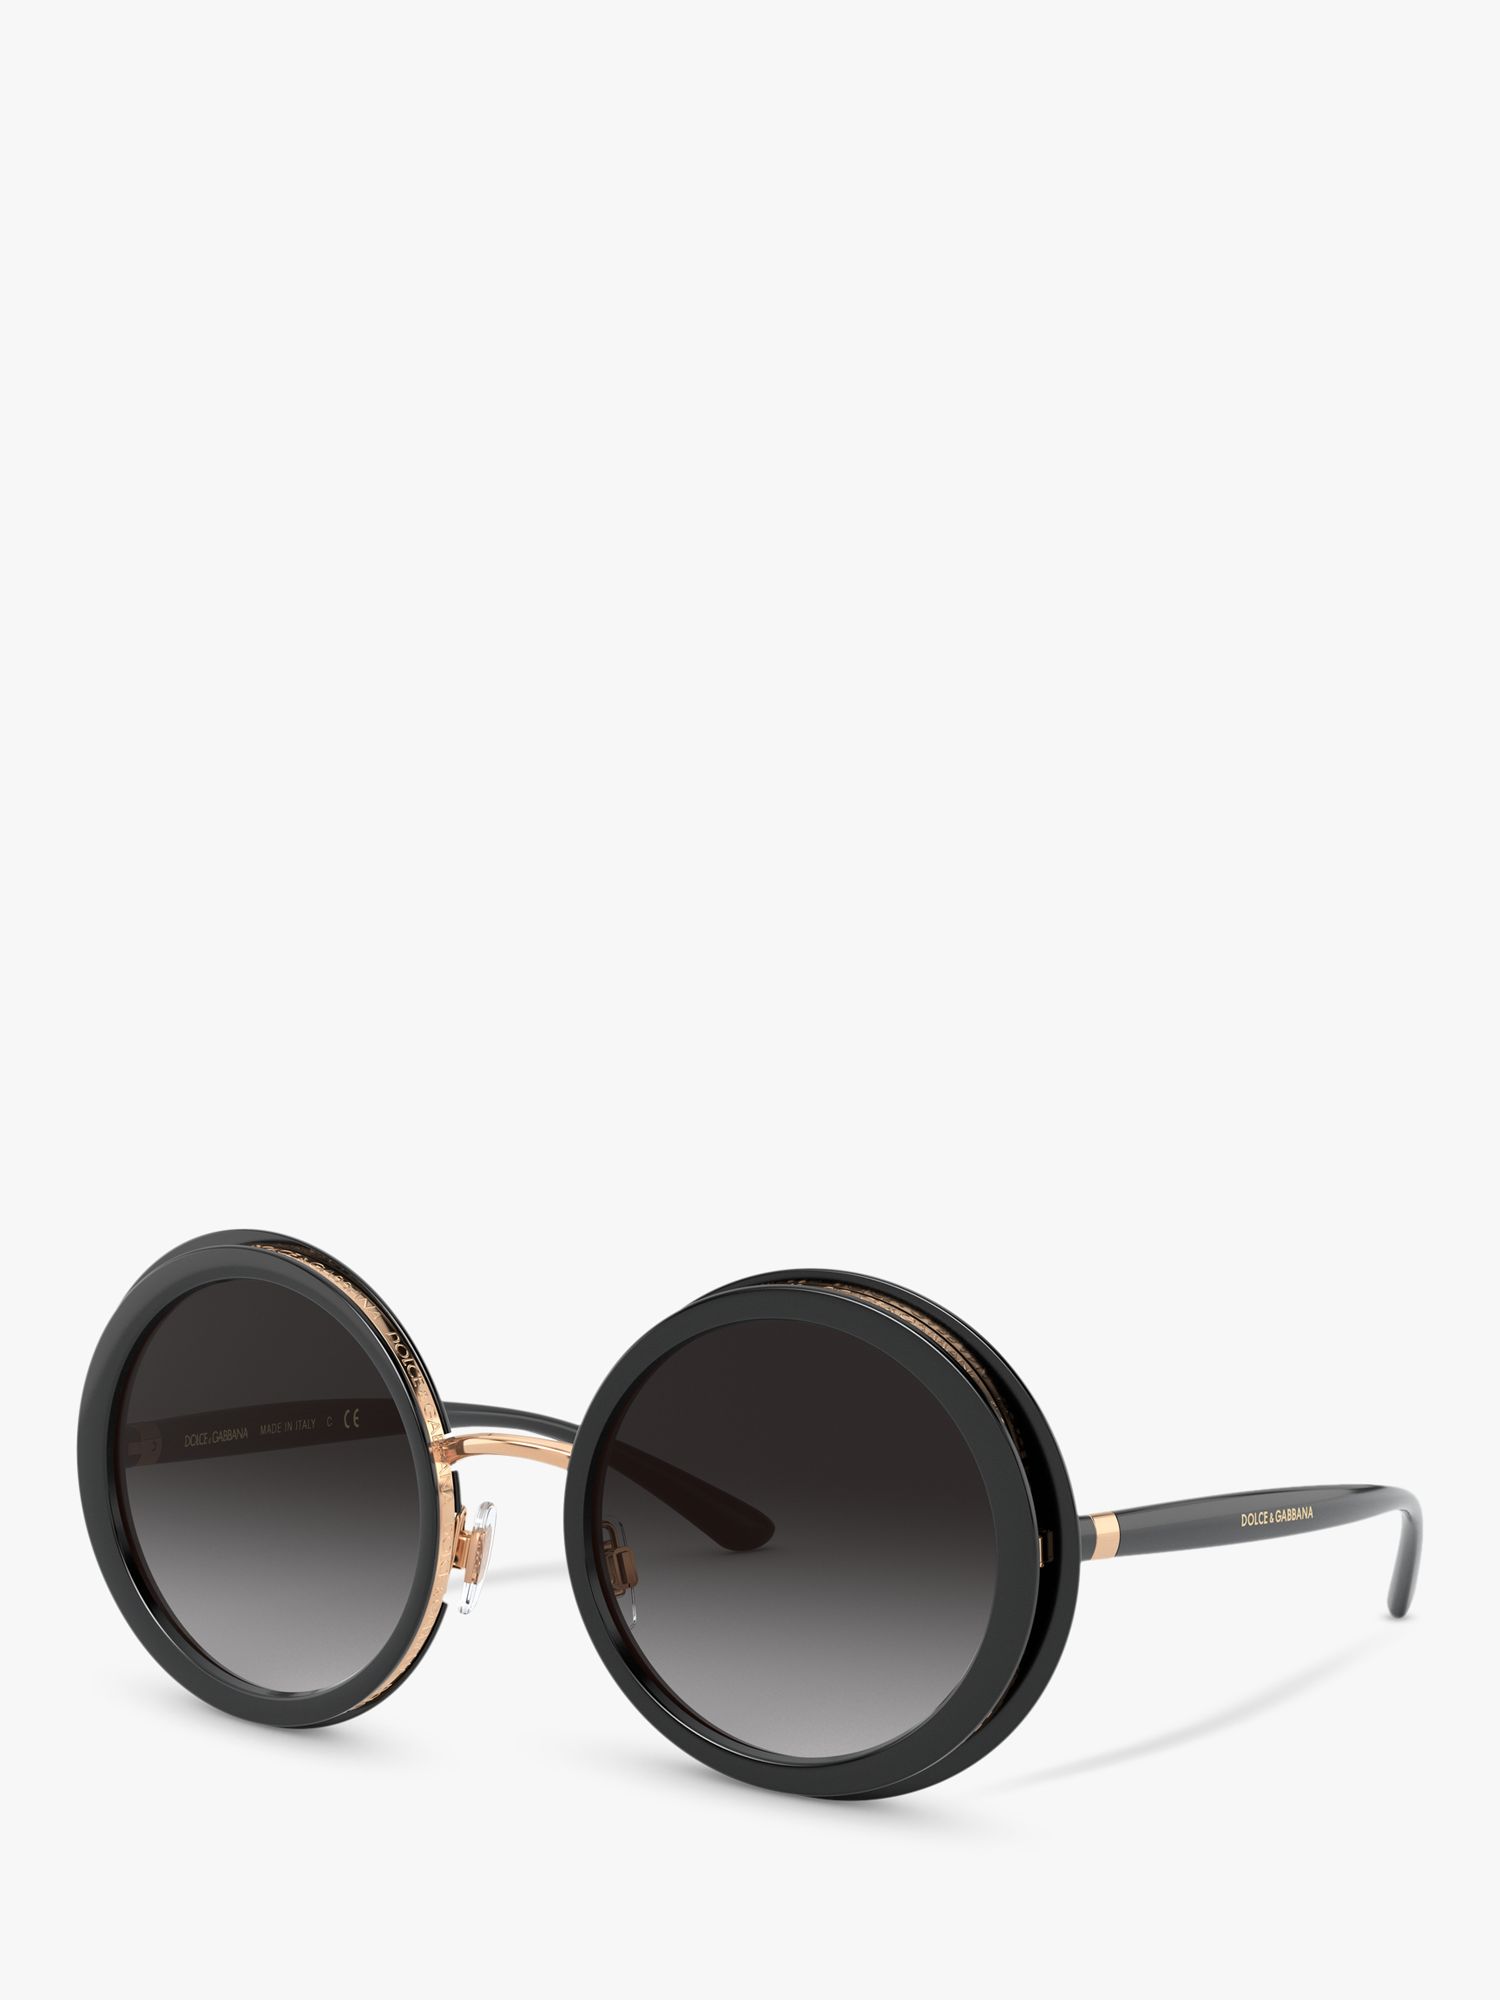 Dolce & Gabbana DG6127 Women's Round Sunglasses